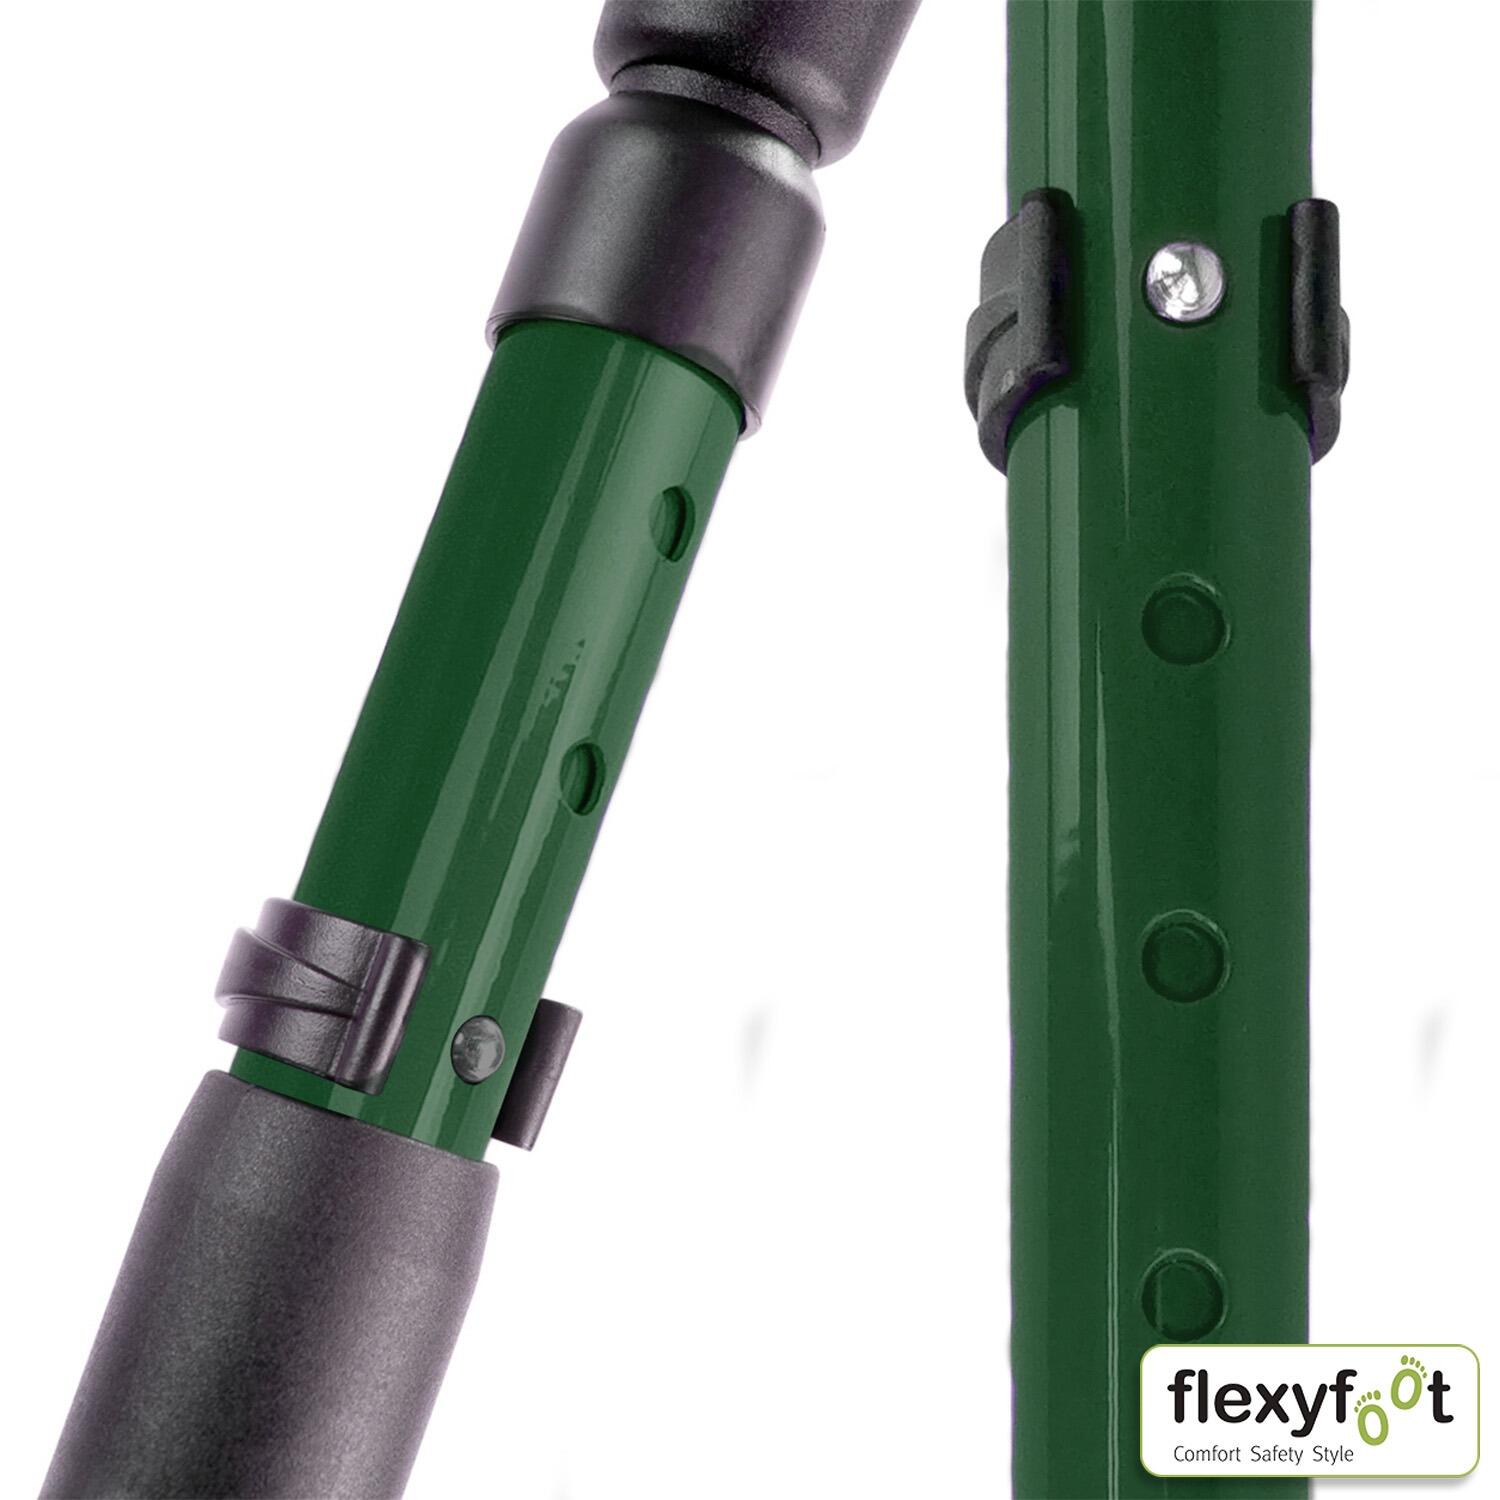 Flexyfoot Soft Grip Shock Absorbing Crutch - British Racing Green - Adjustment